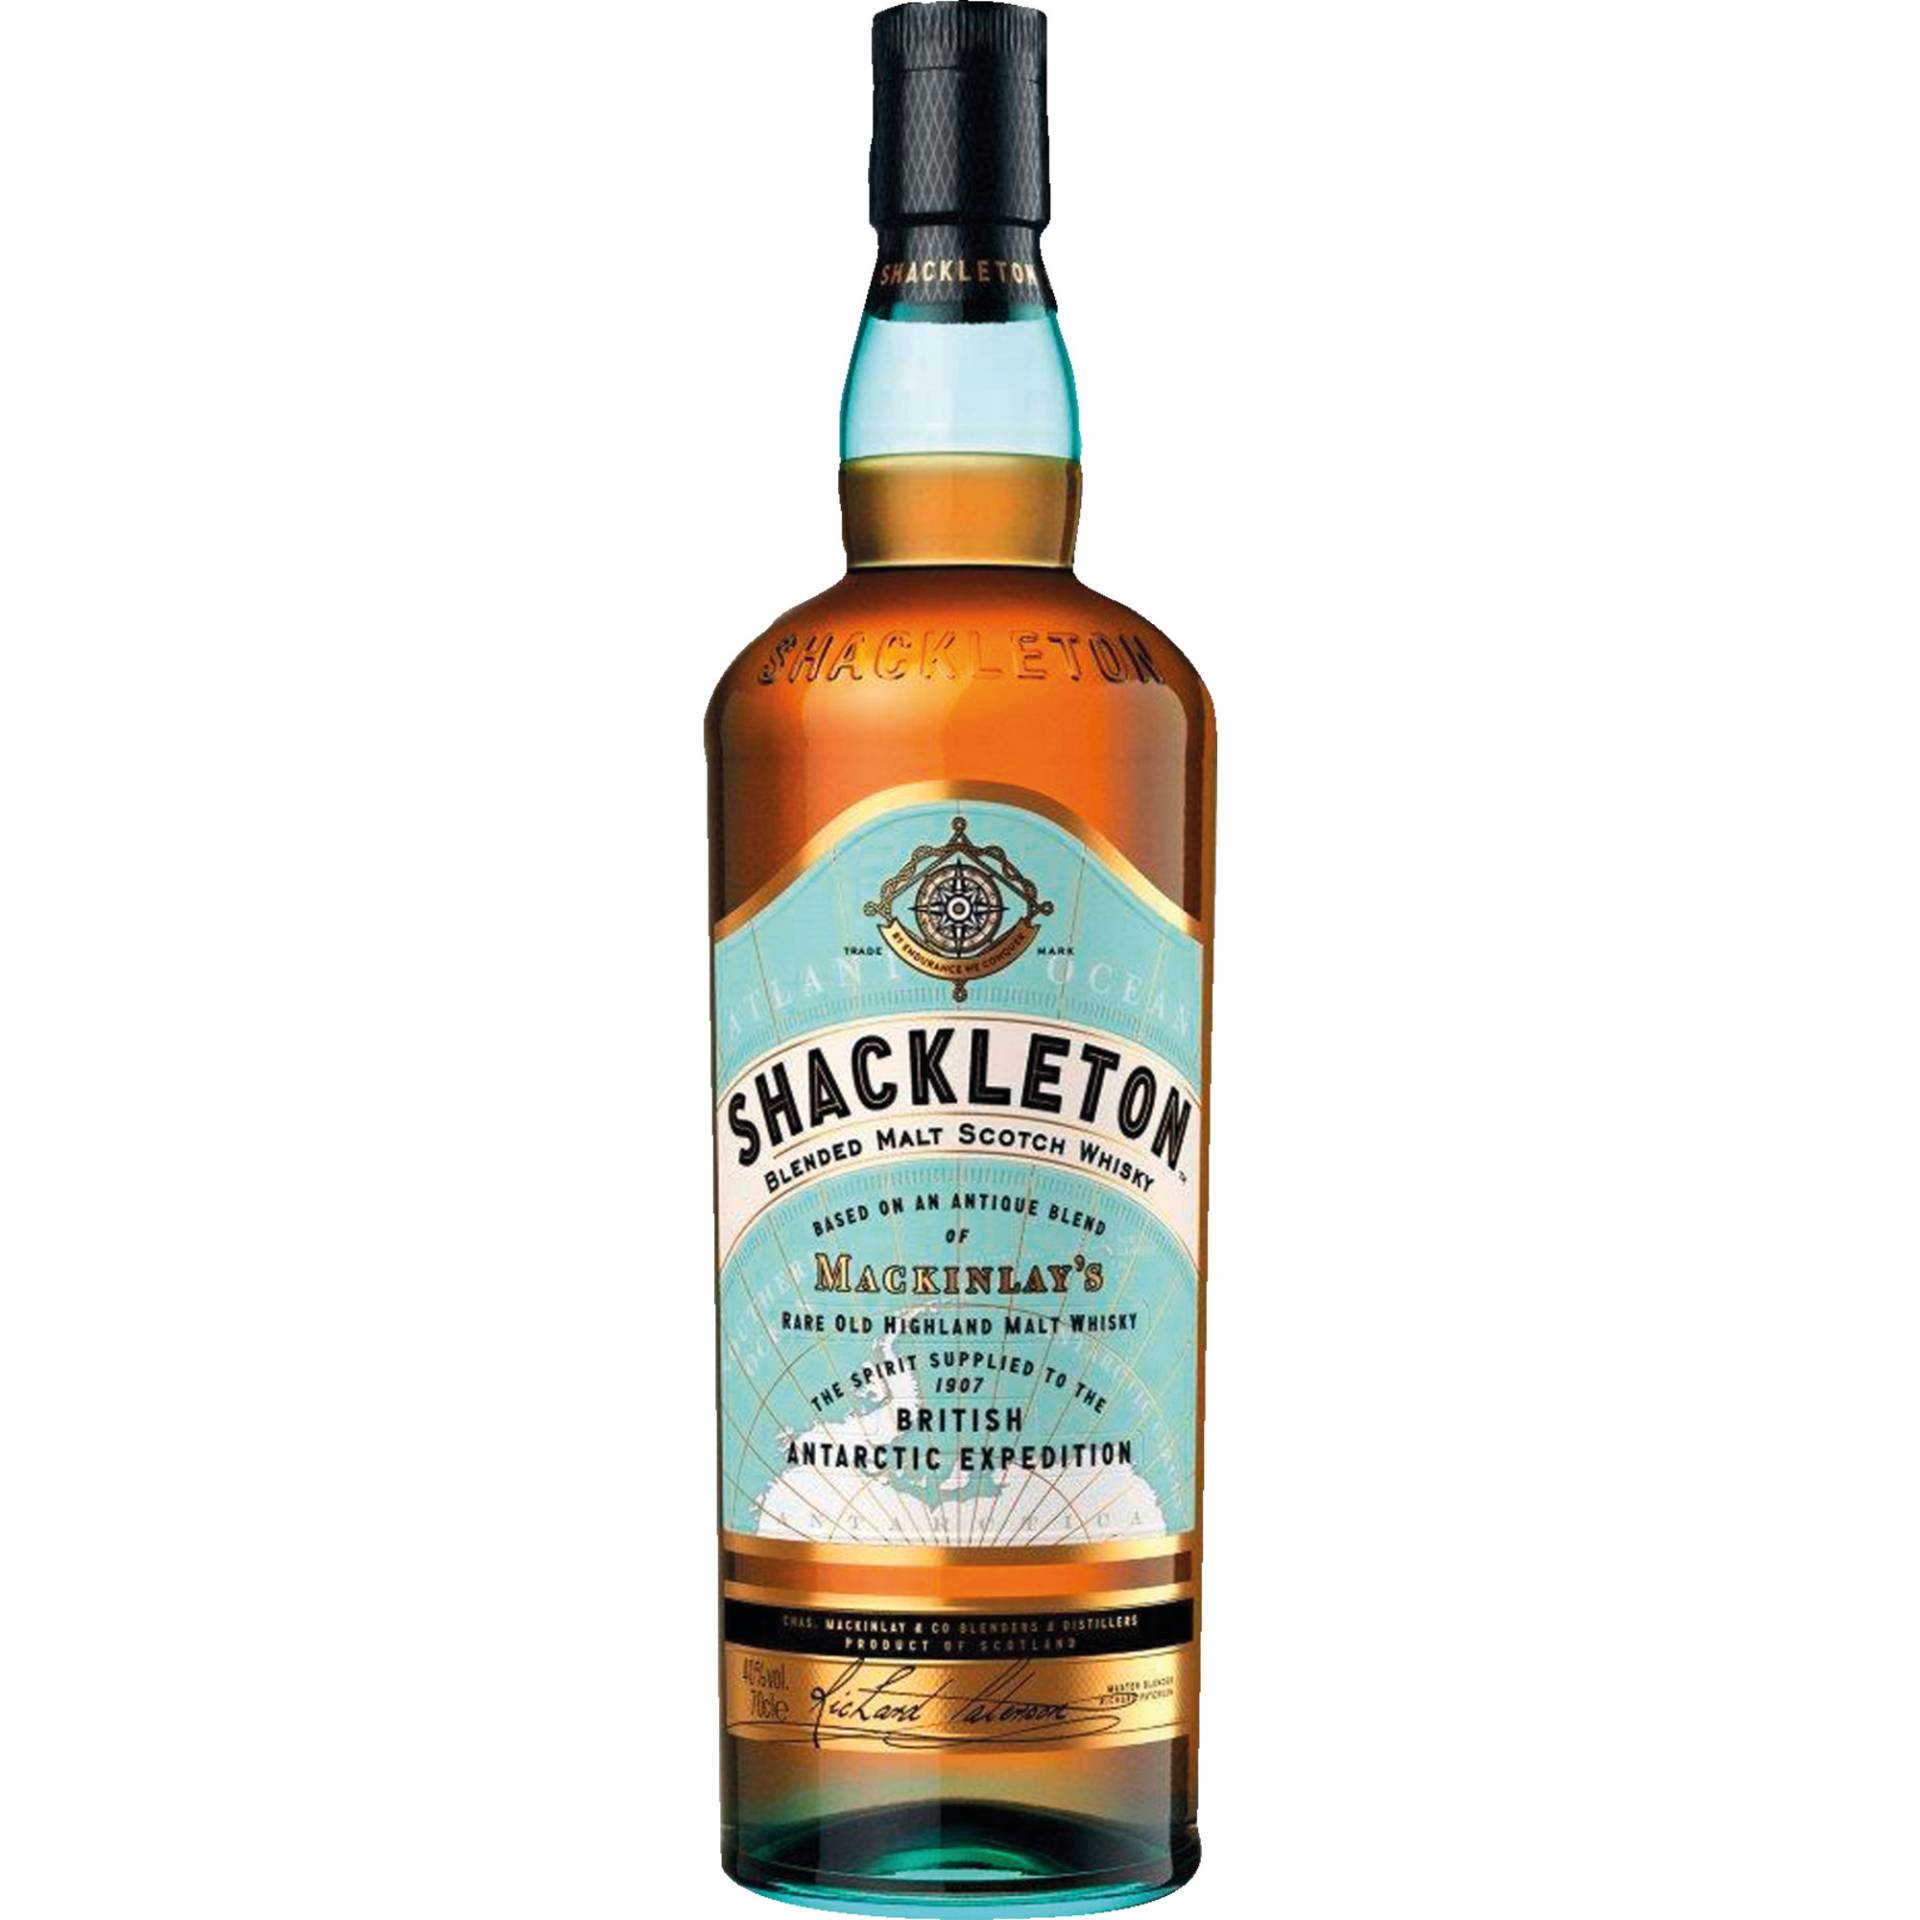 Shackleton Blended Malt Whisky, Scotch Whiskey, 0,7L, 40% Vol., Schottland, Spirituosen von Whyte and Mackay Ltd., 310 St Vincent Street, G2 5RG Glasgow, U.K.